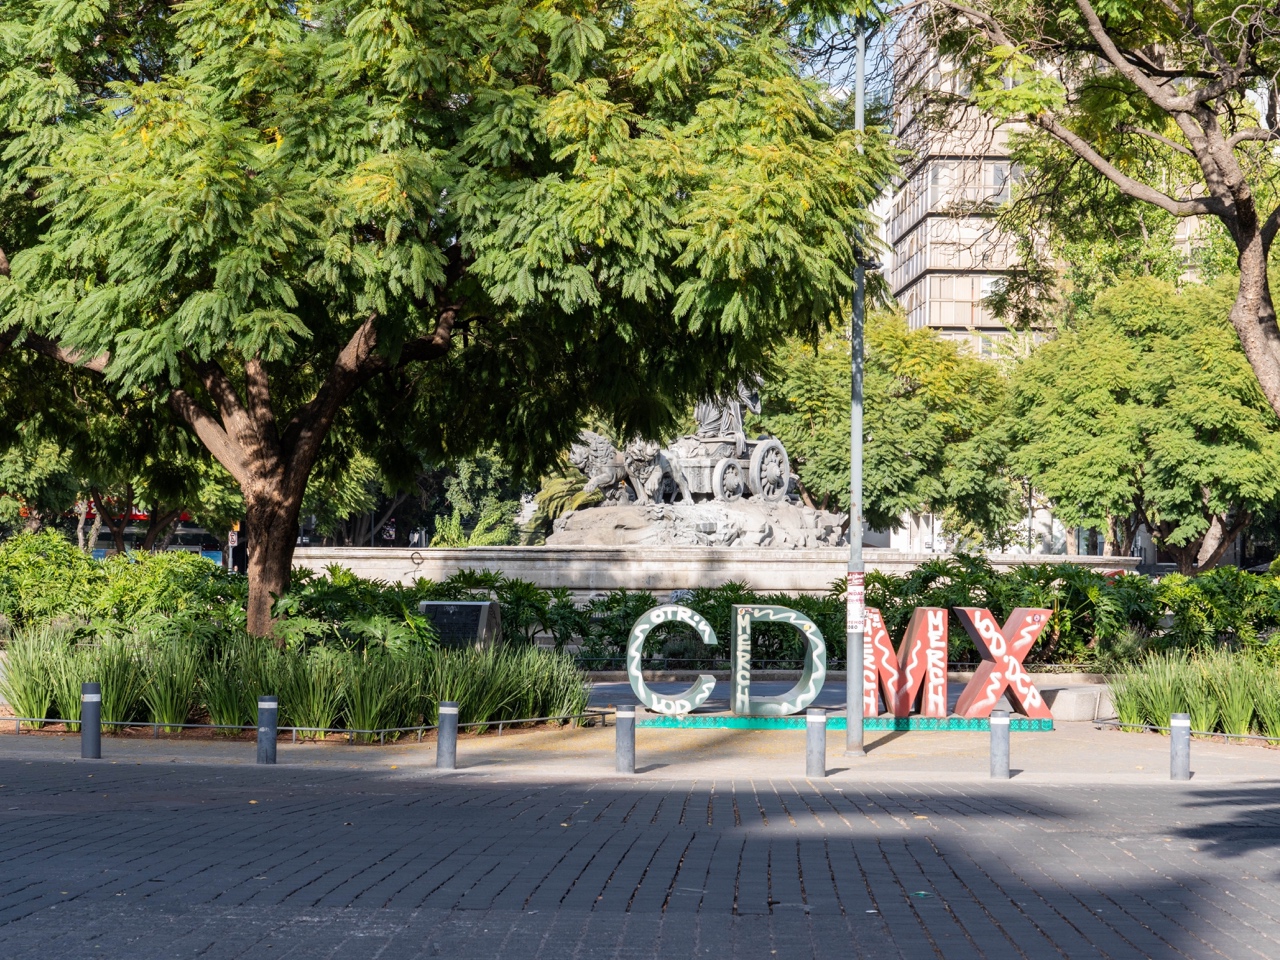 cdmx mexico city